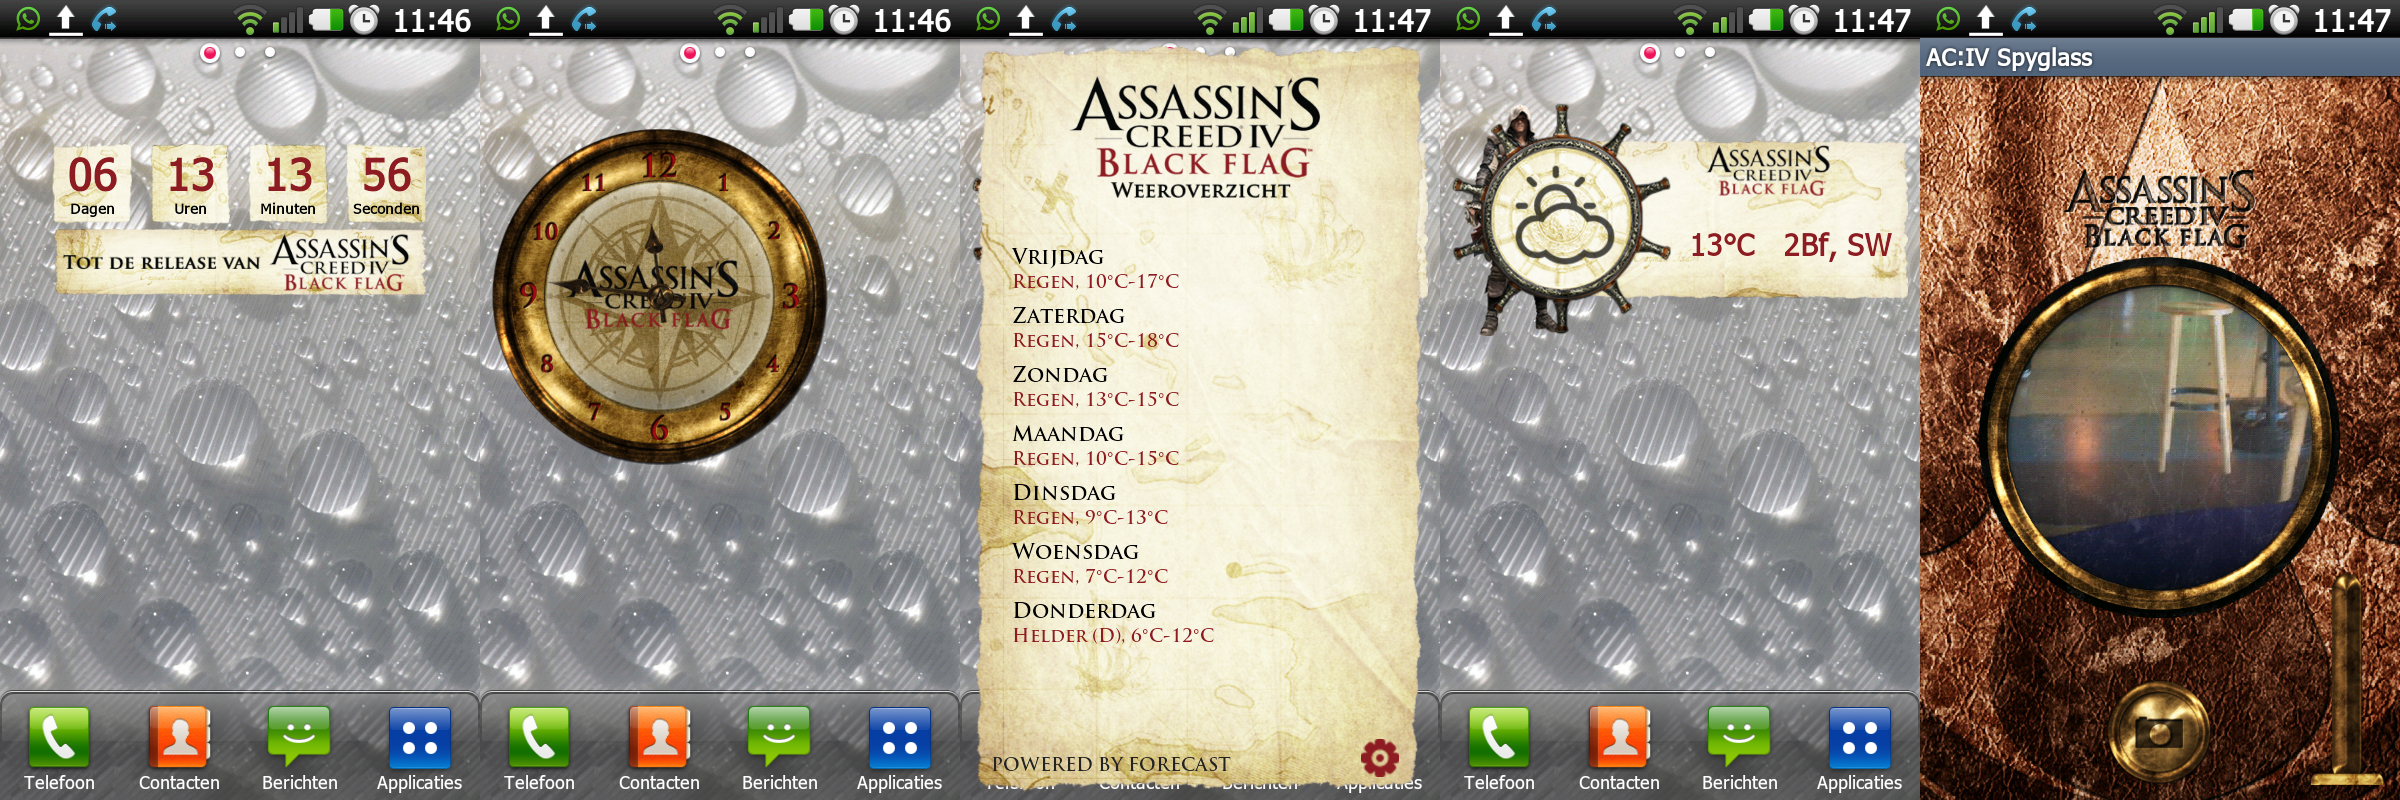 Assassin's Creed IV Widgets (October 2013) on Behance